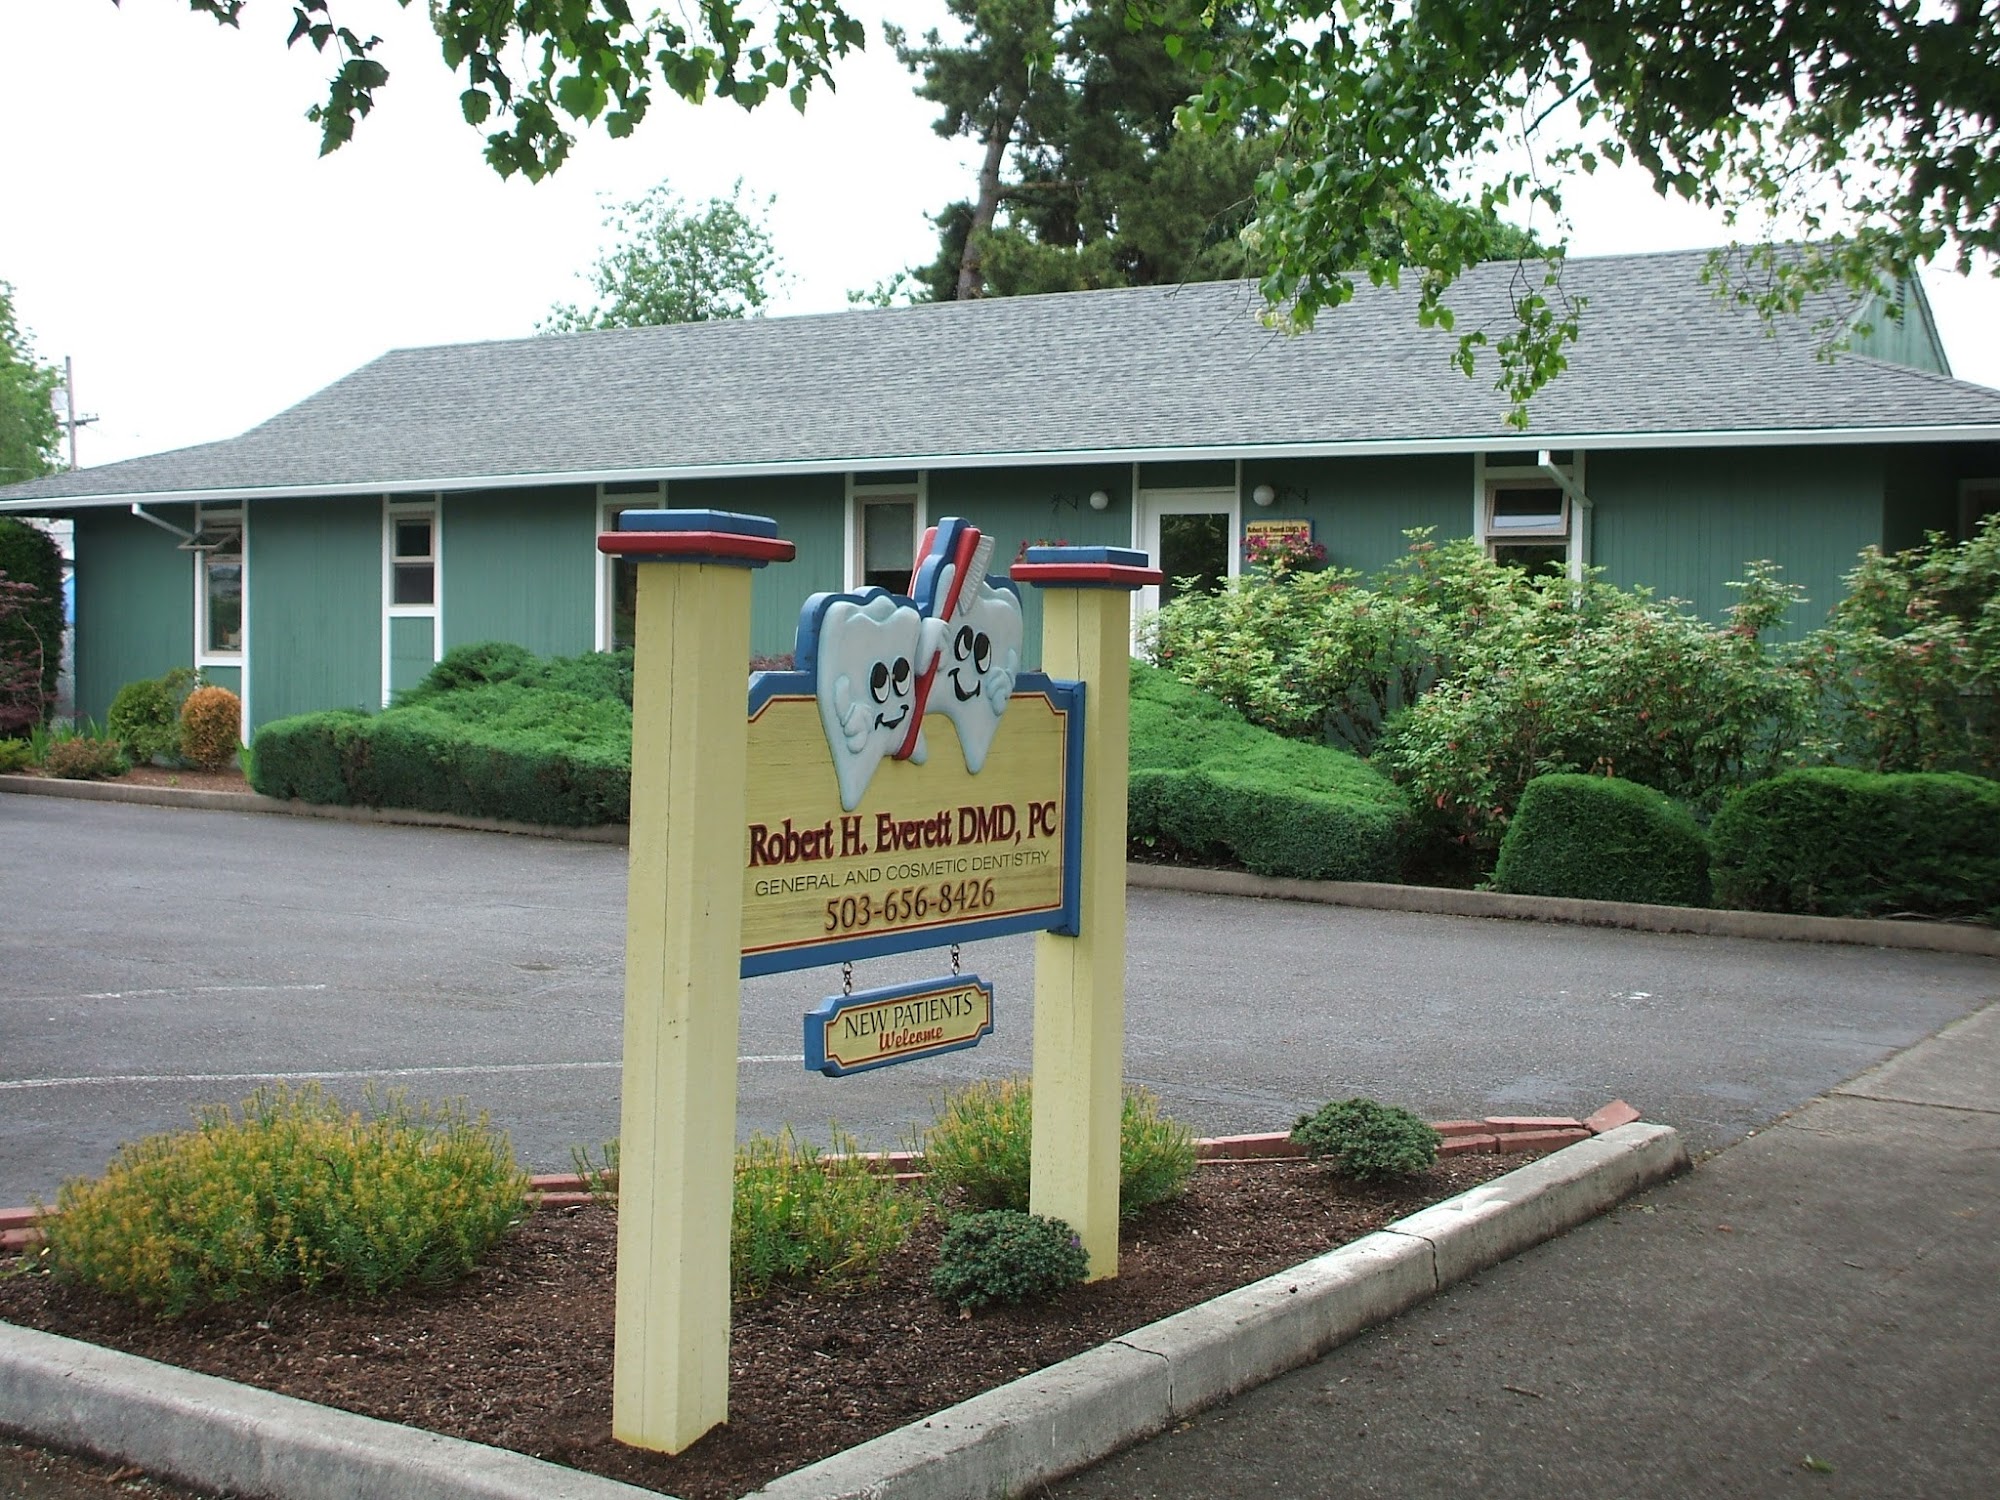 Happy Rock Dental: Robert H. Everett, DMD, PC 325 Portland Ave, Gladstone Oregon 97027